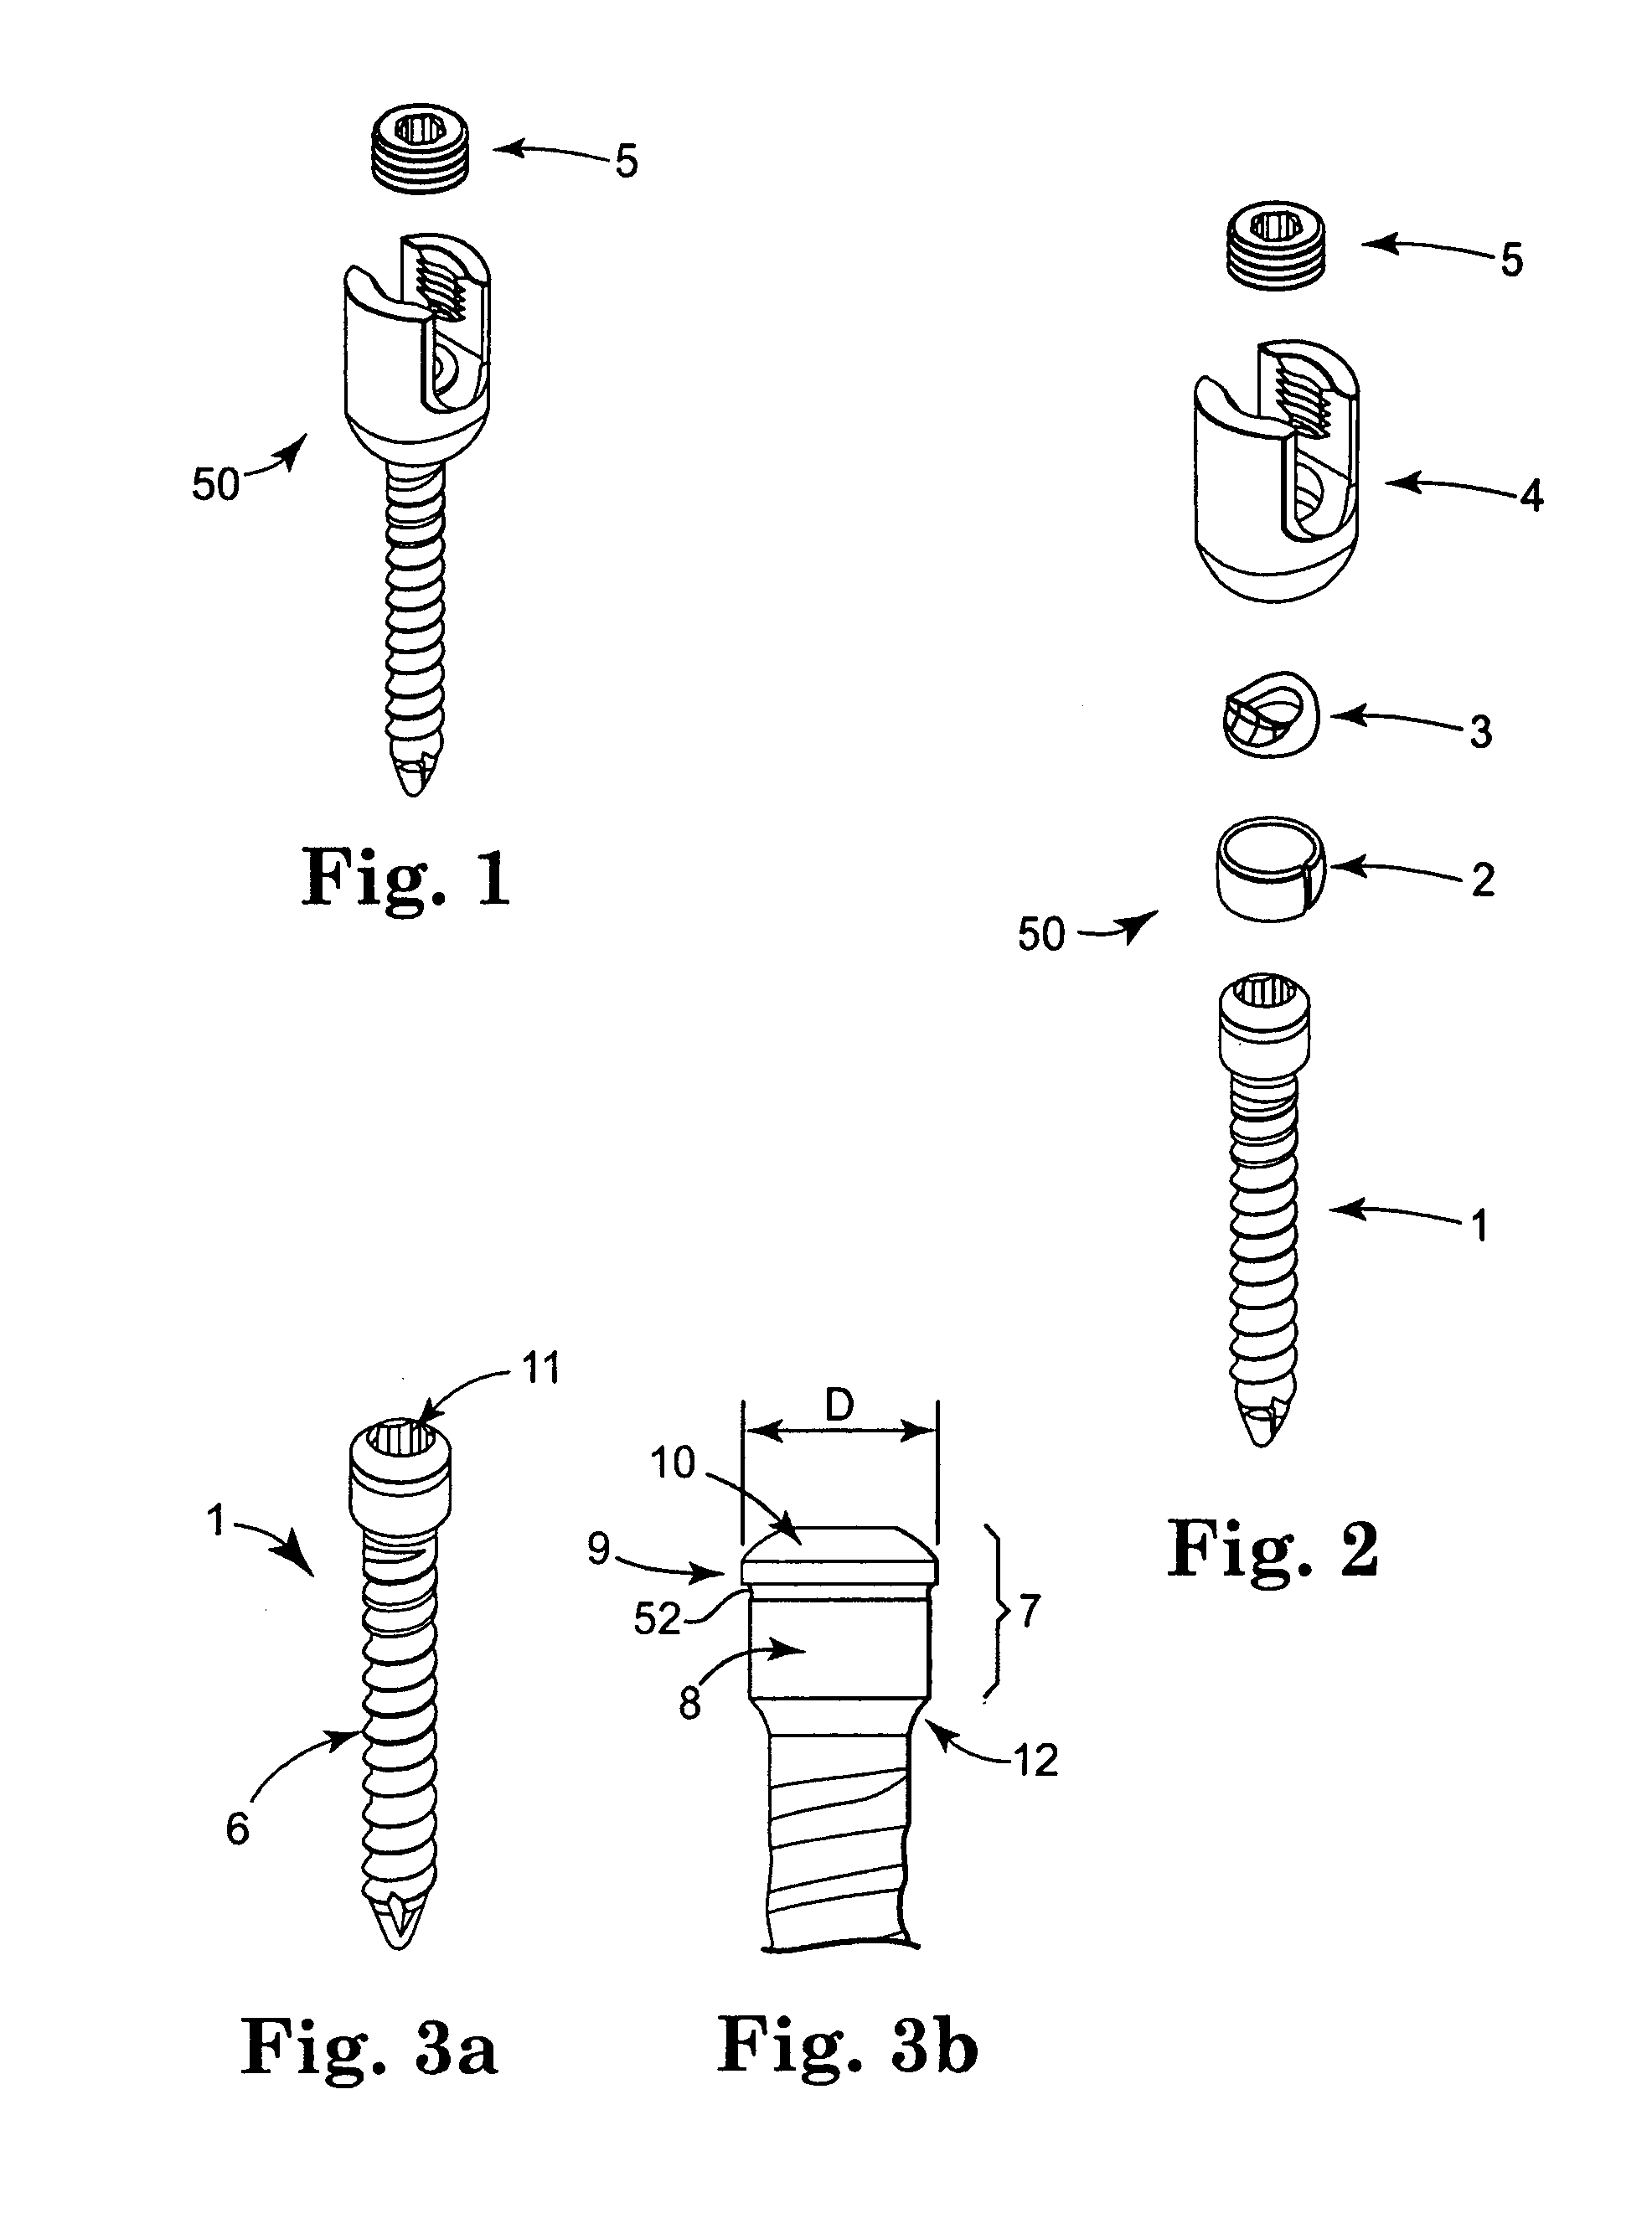 Multi-axial bone screw mechanism